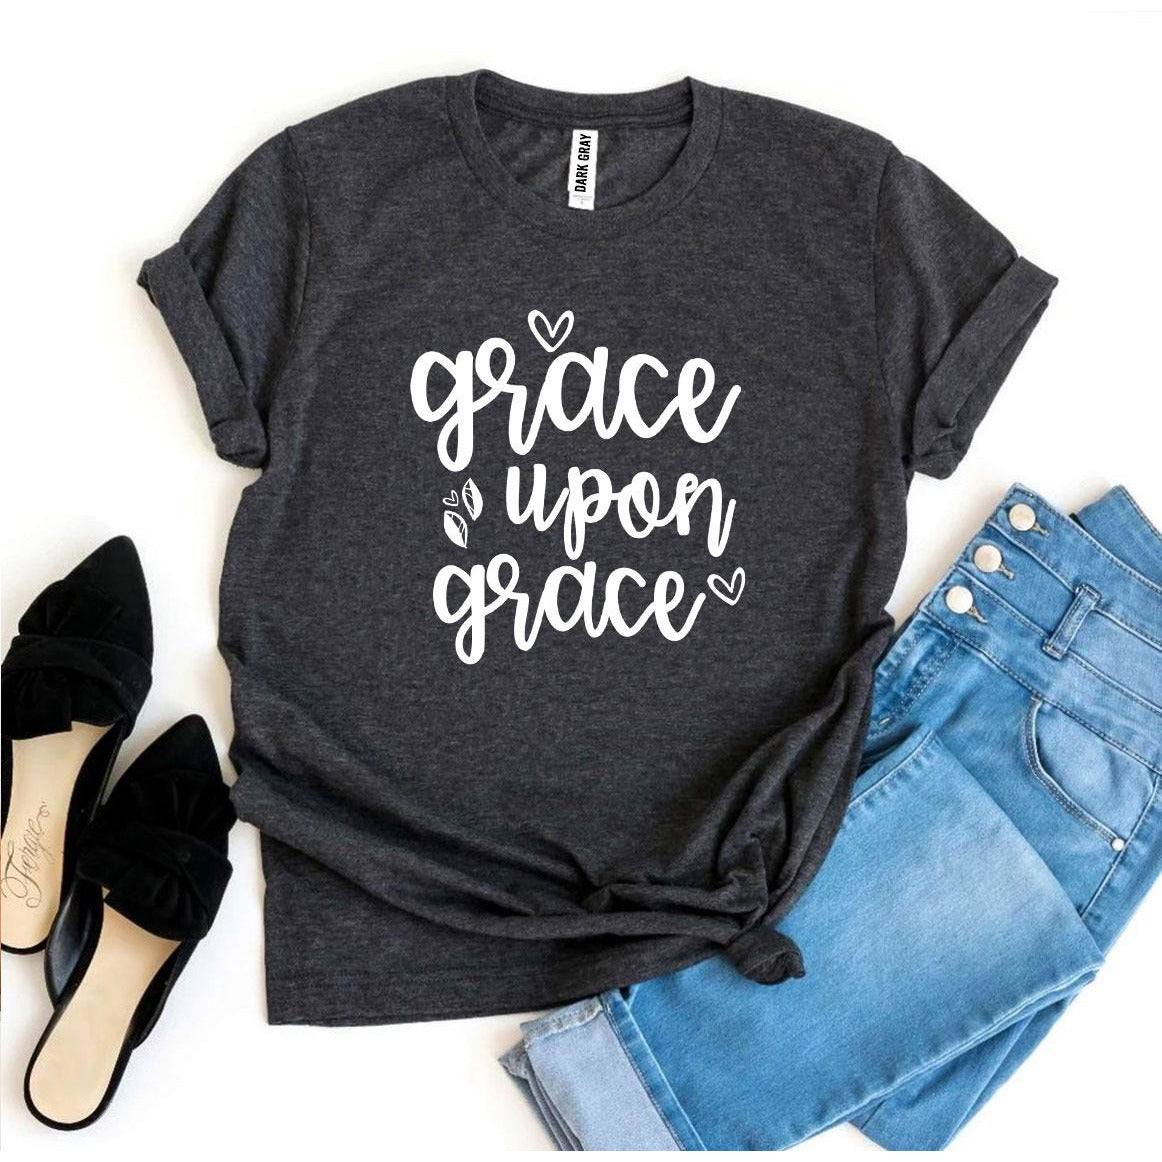 Share Your Faith Grace Upon Grace T-Shirt One Clover Way